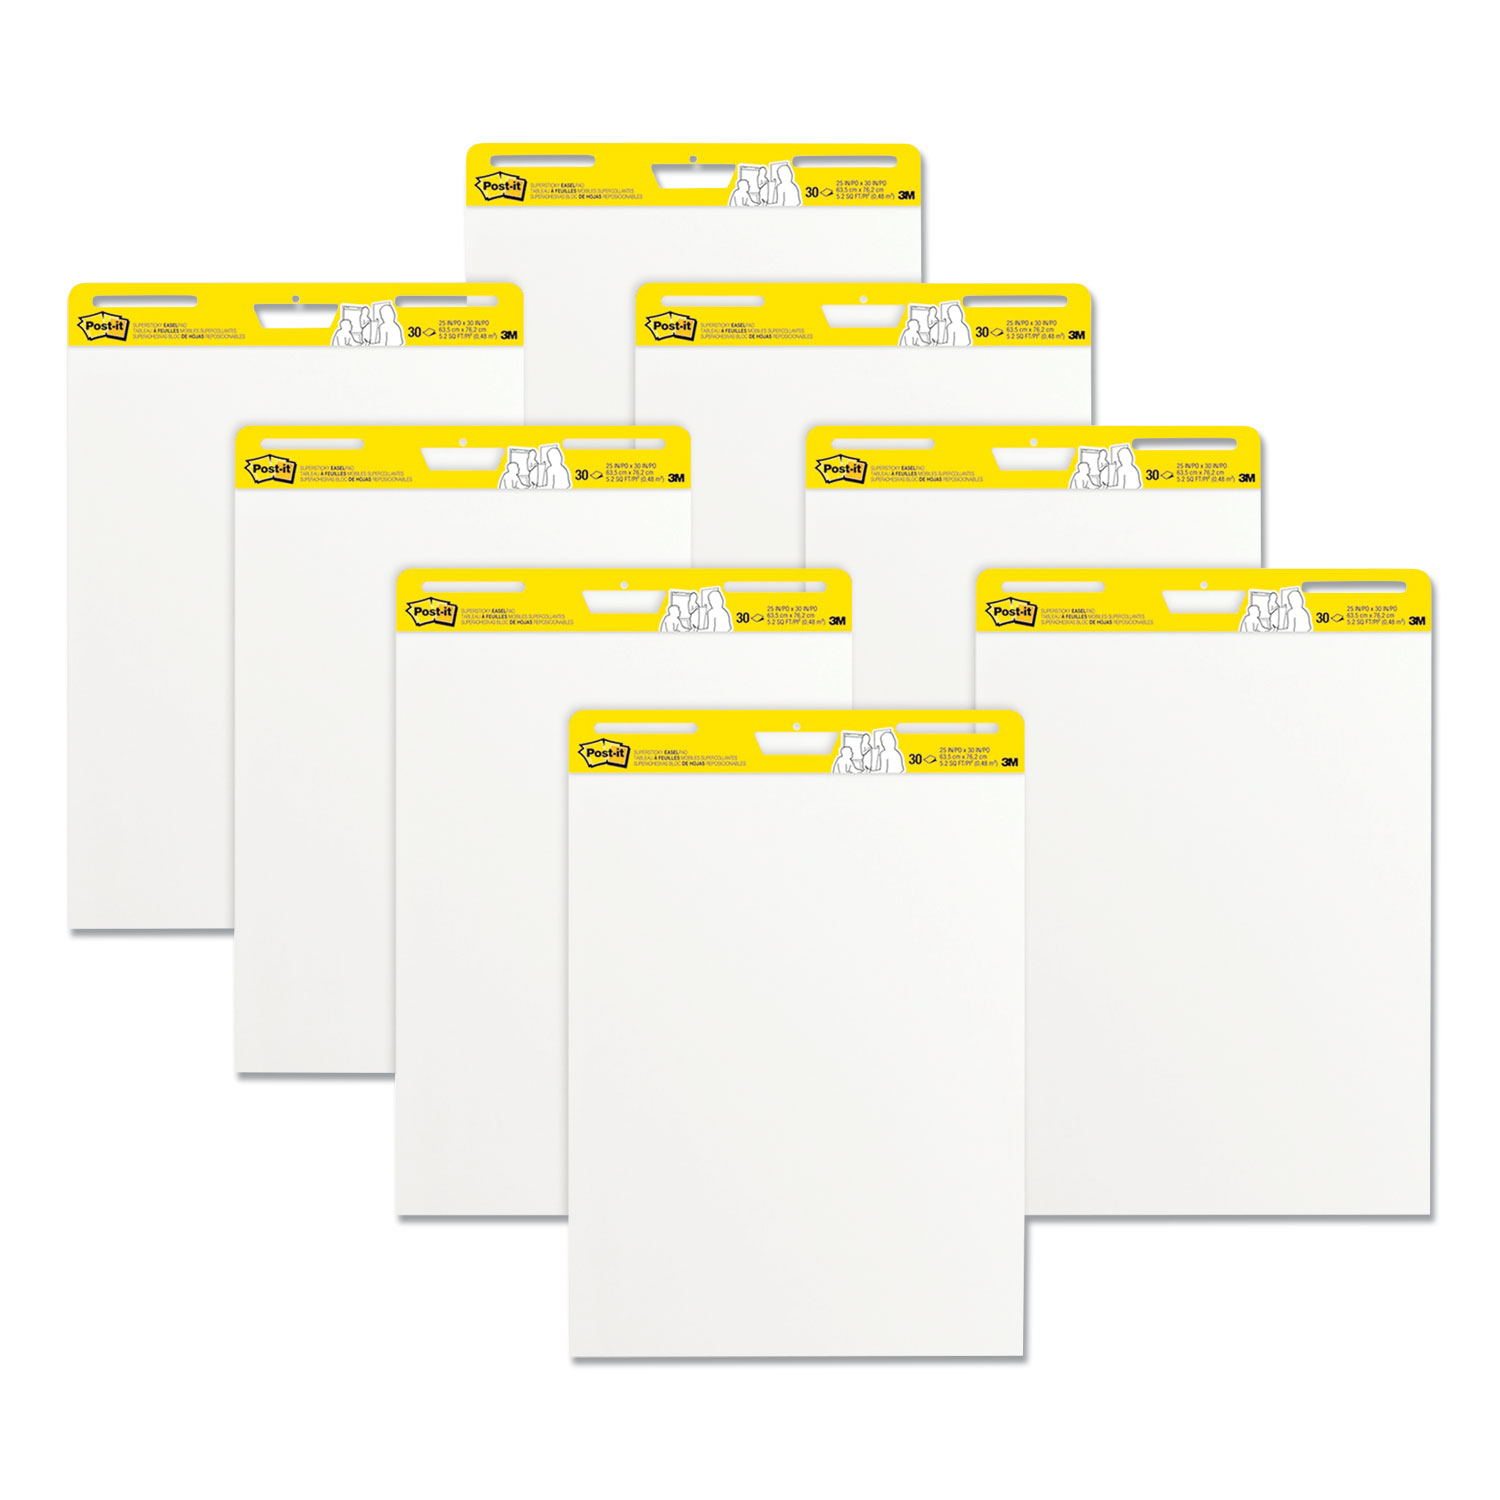 Post-it Self-Stick Easel Pad Ruled 25 x 30 Yellow 2 30-Sheet Pads MMM561